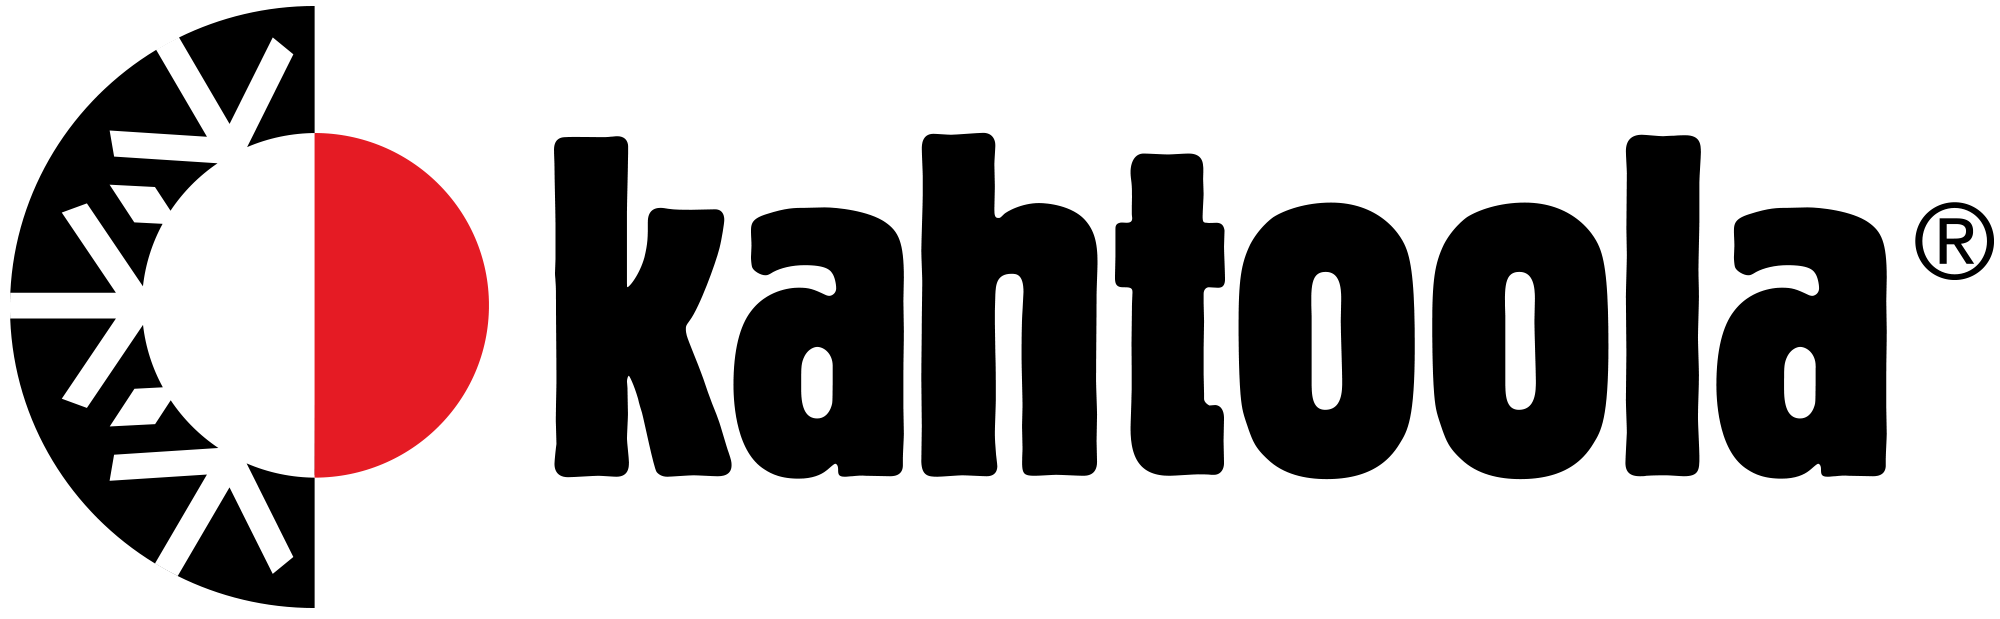 Kahtoola - logo